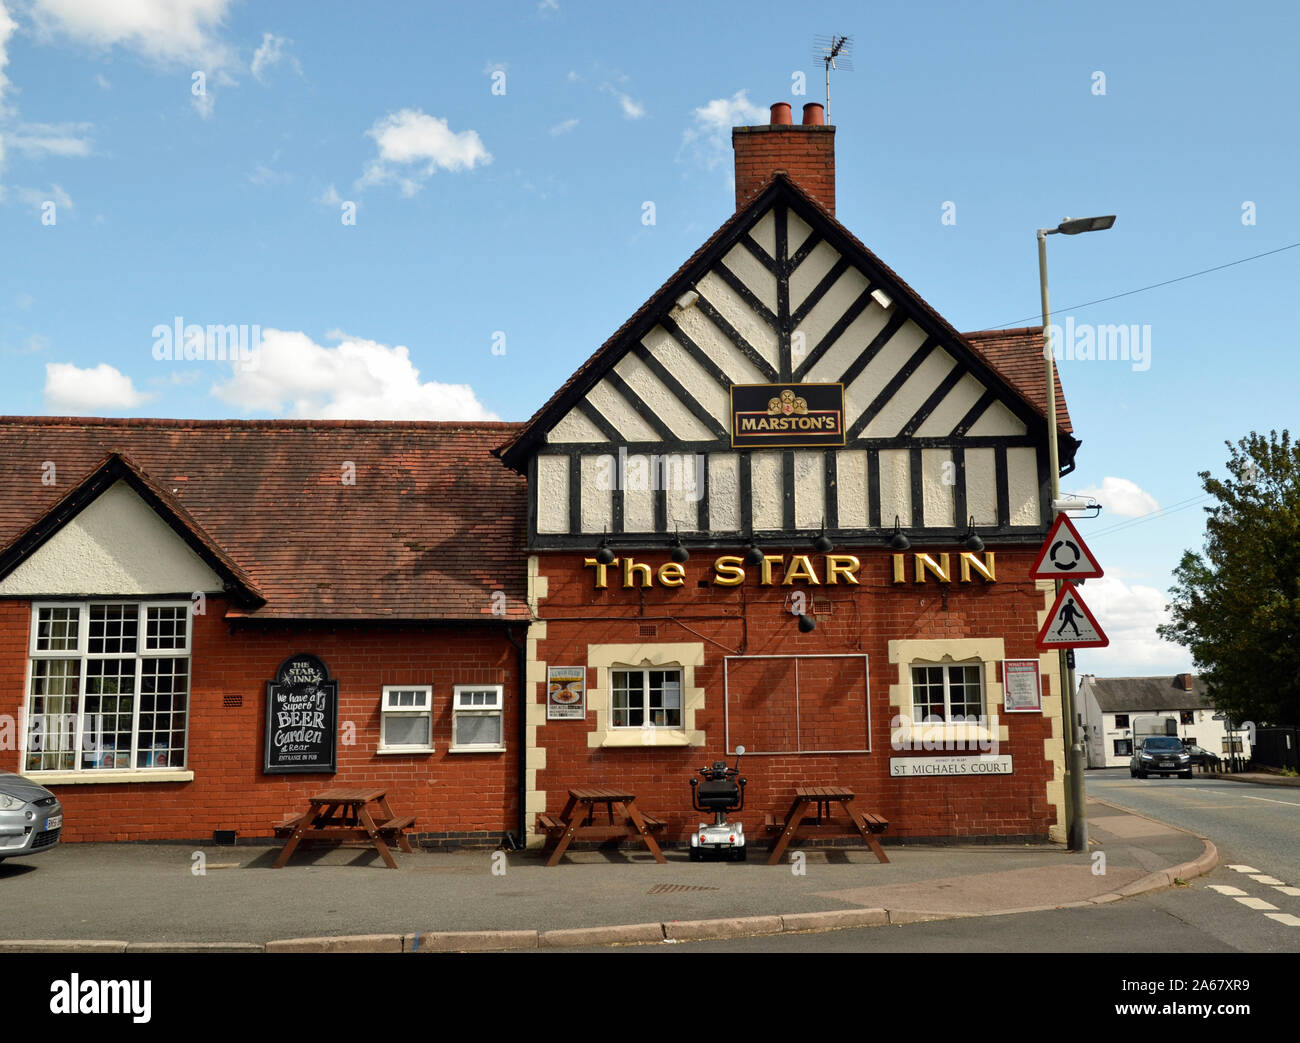 The Star Inn at Stoney Stanton, Leicestershire, UK Stock Photo